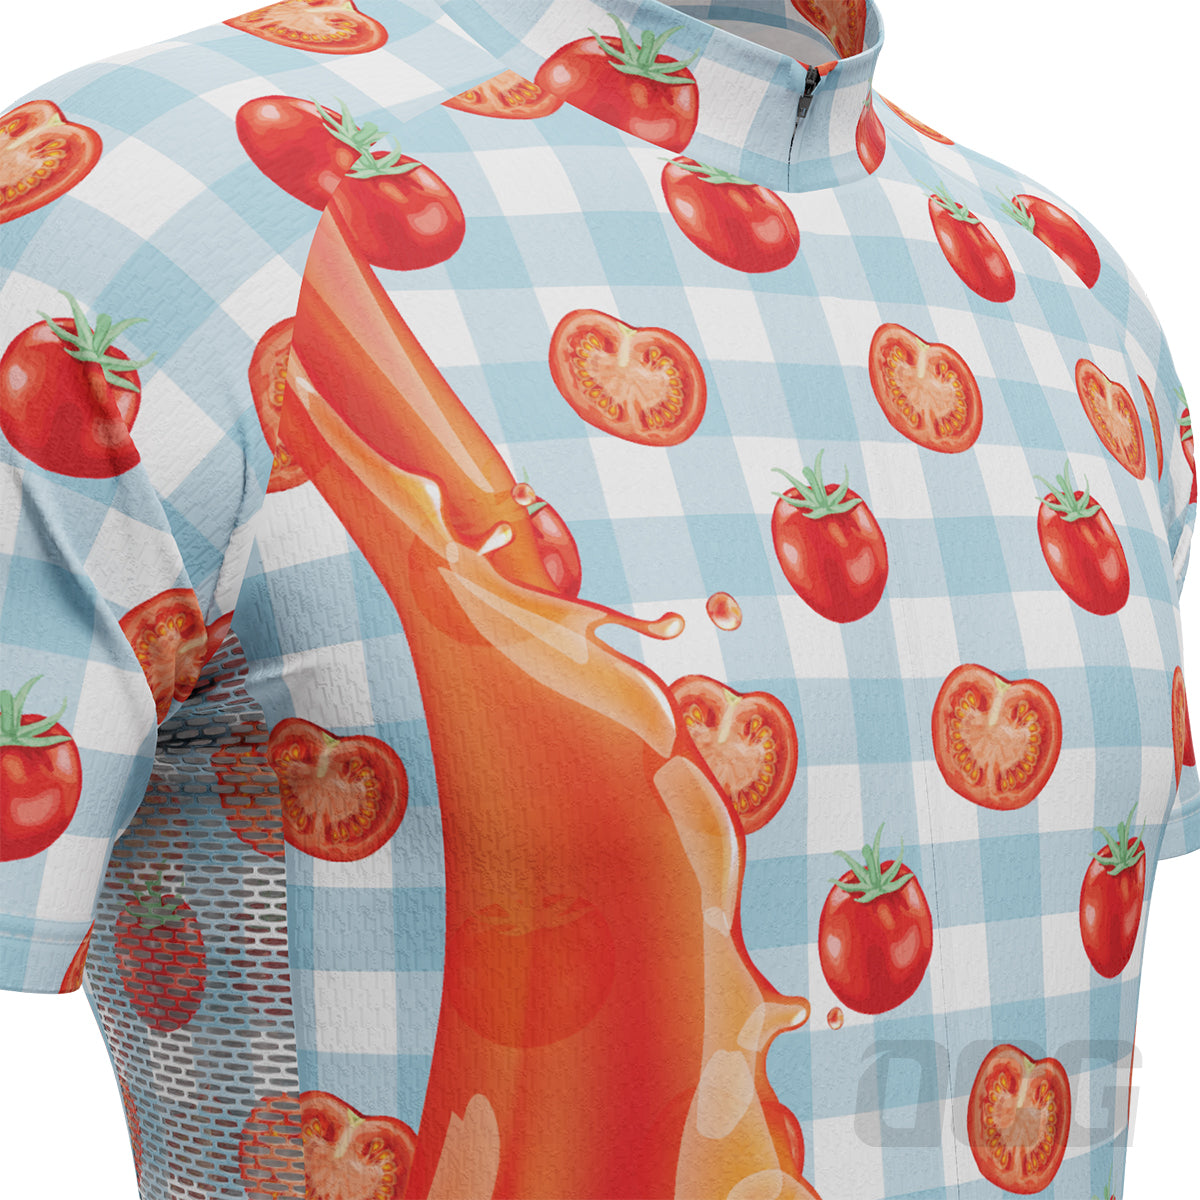 Men's Tomato Sauce Table Cloth  Short Sleeve Cycling Kit